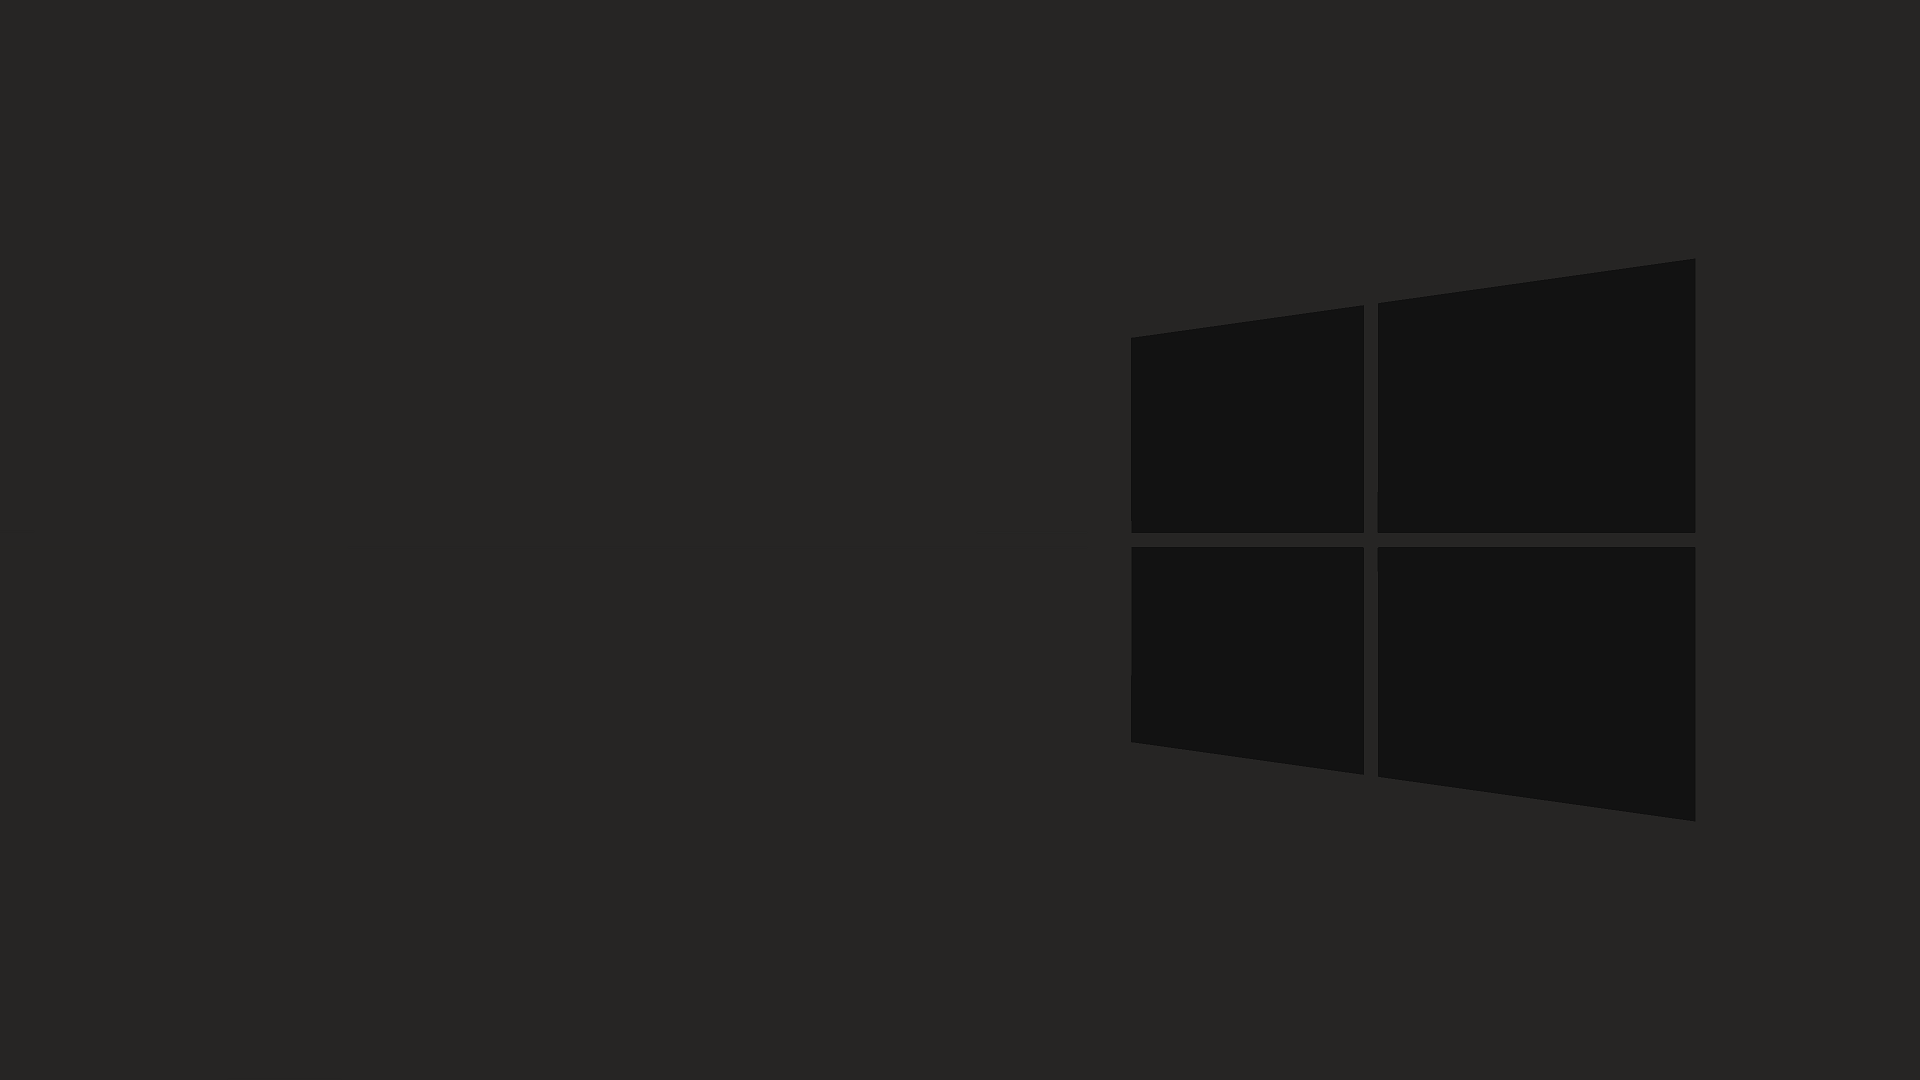 Black Windows 10 Hd Wallpapers - Top Free Black Windows 10 Hd